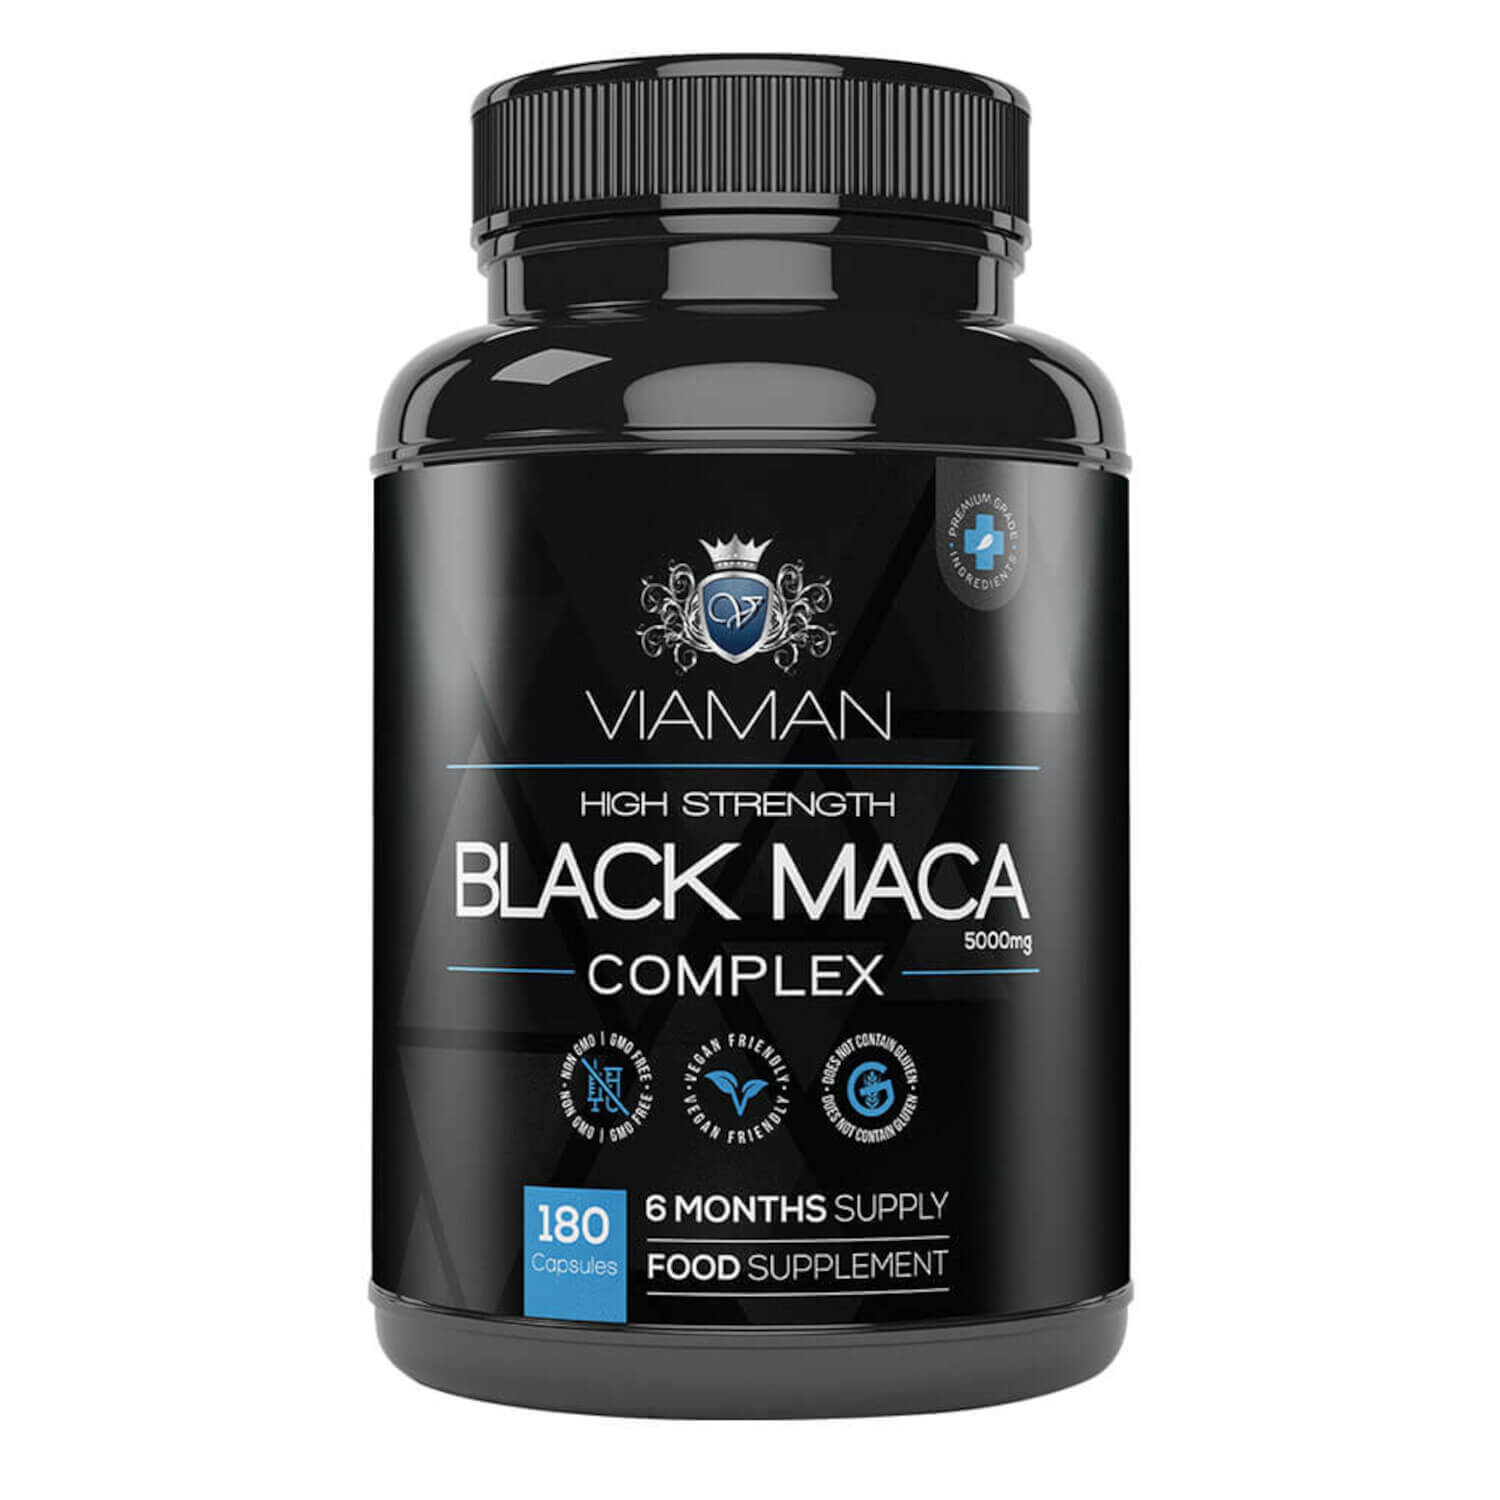 Viaman Black Maca Complex er en kosttilskud